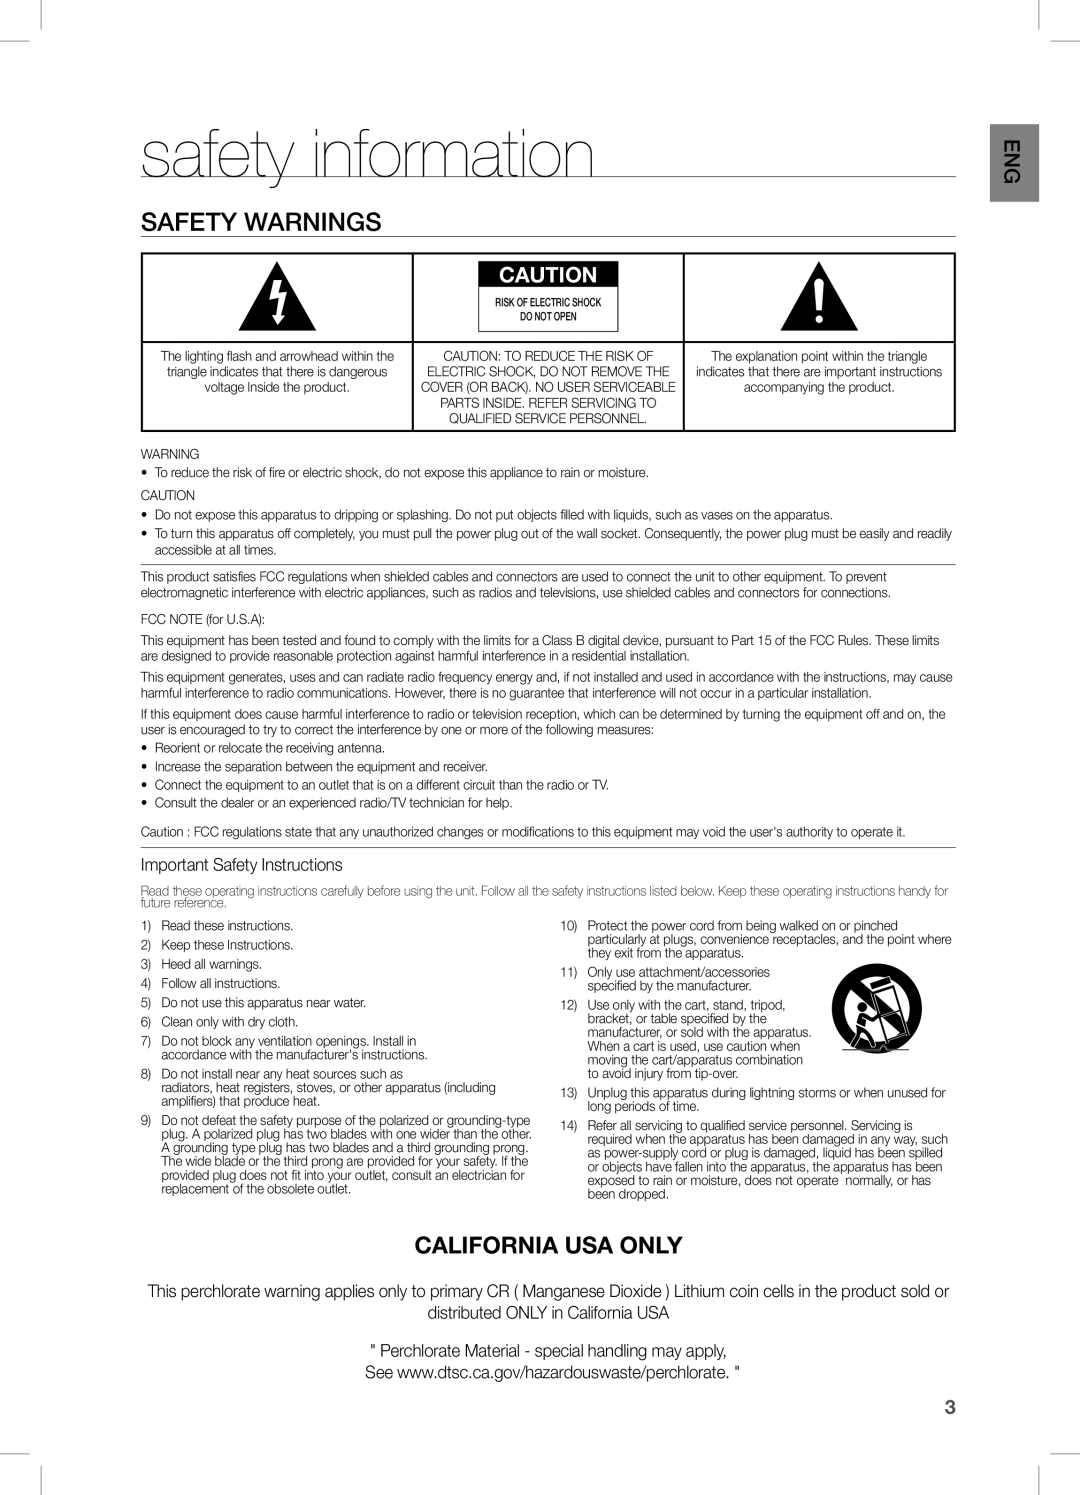 Samsung DA-E570 user manual safety information, Safety Warnings, California Usa Only 